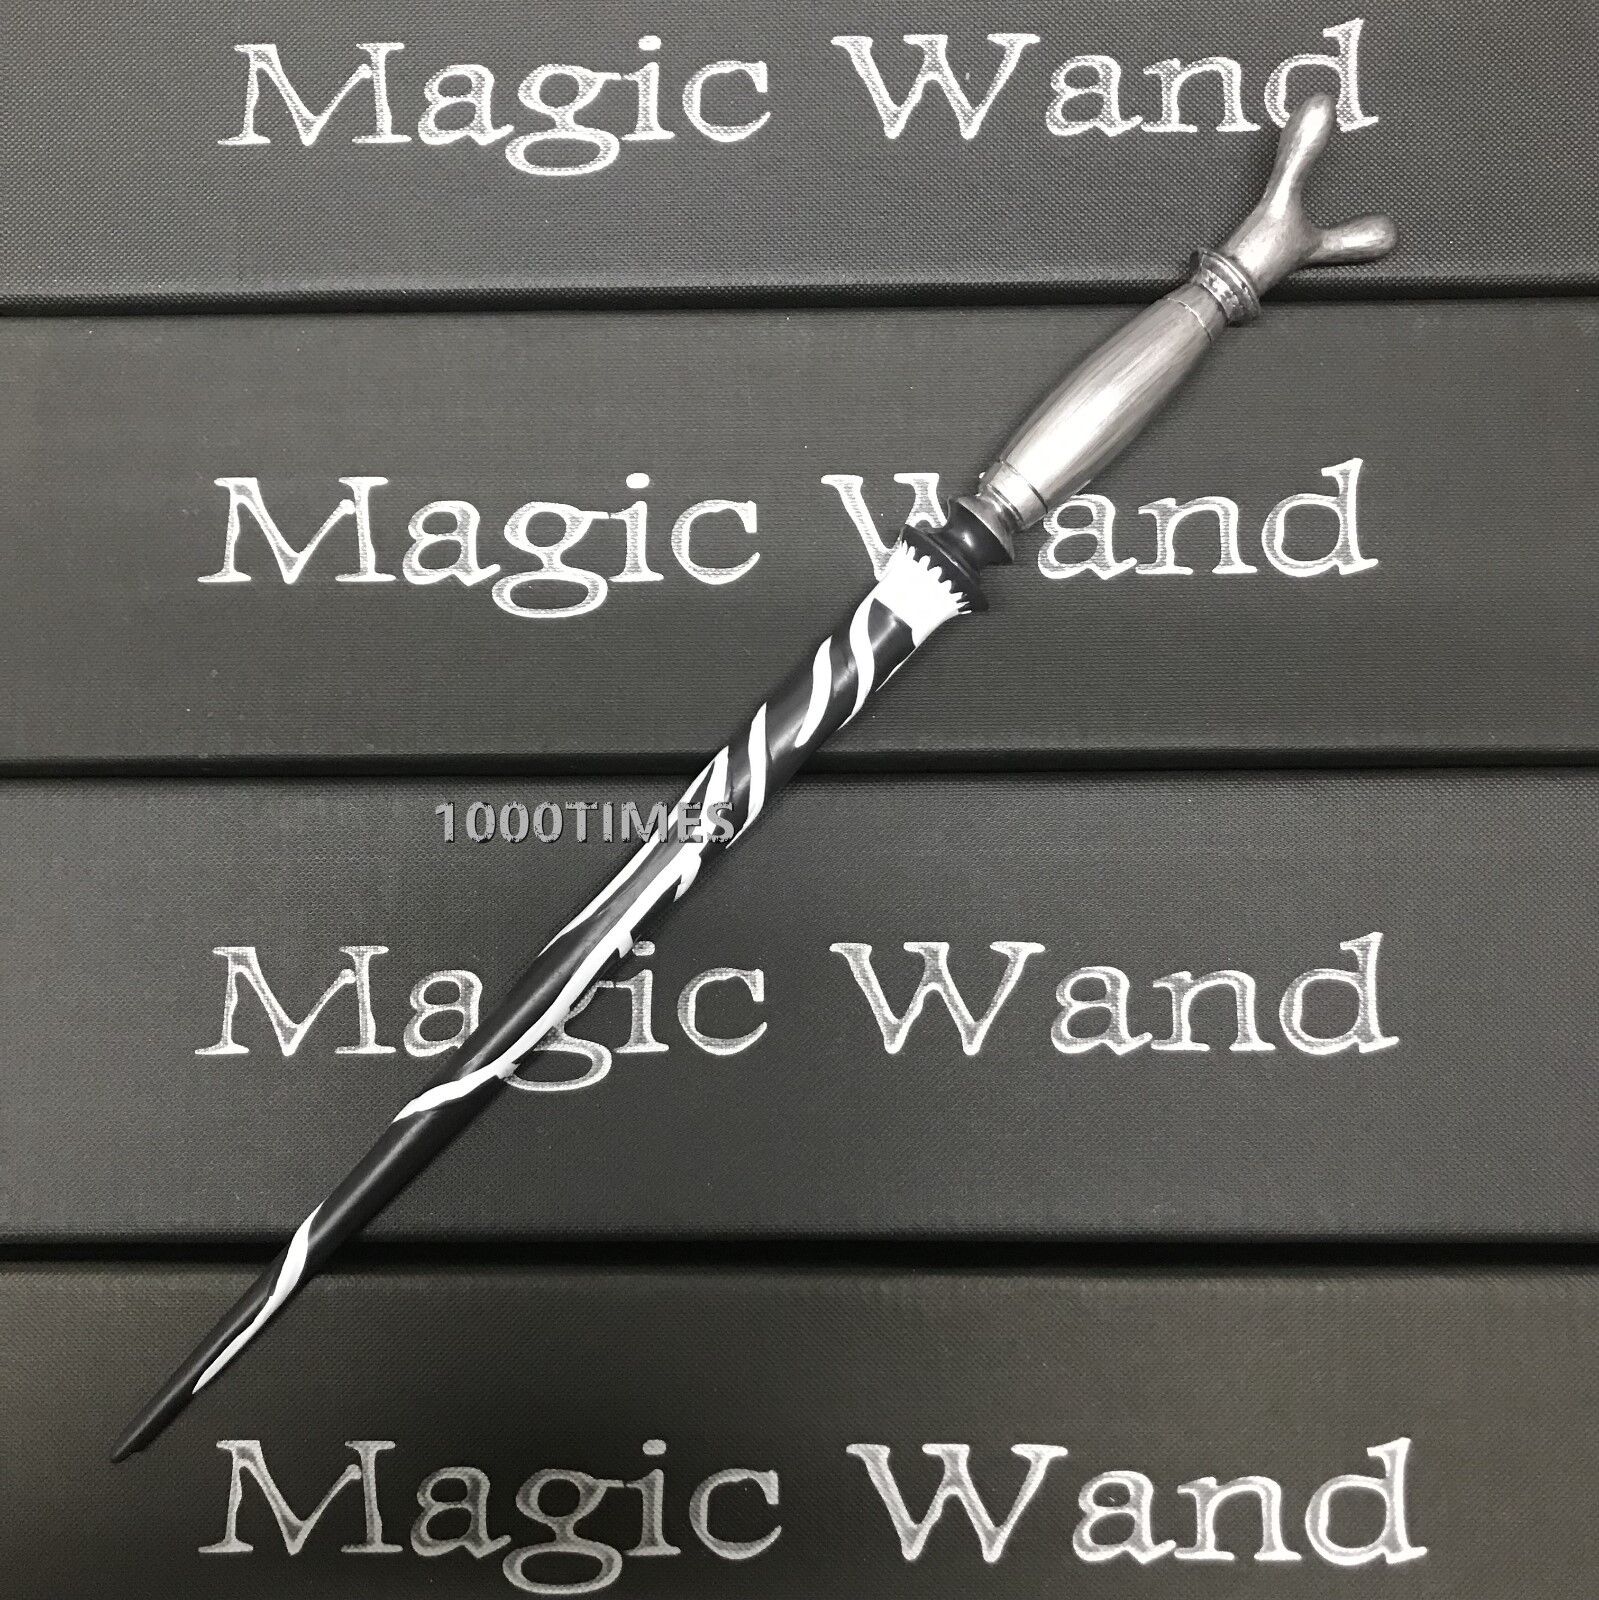 Harry Potter Professor Horace Slughorn  Wand Wizard Cosplay Costume